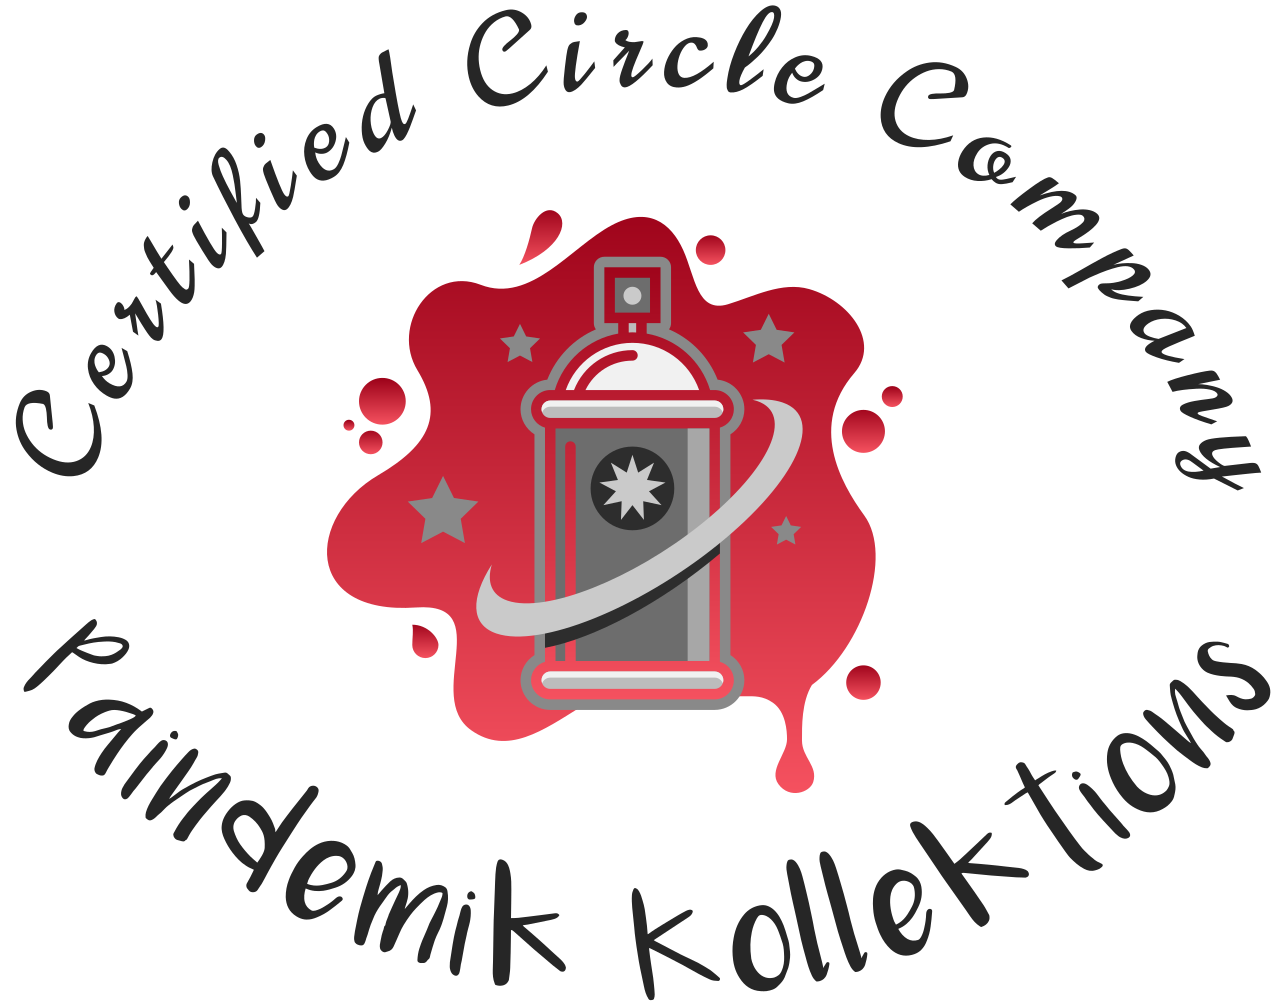 Certified Circle Company's logo